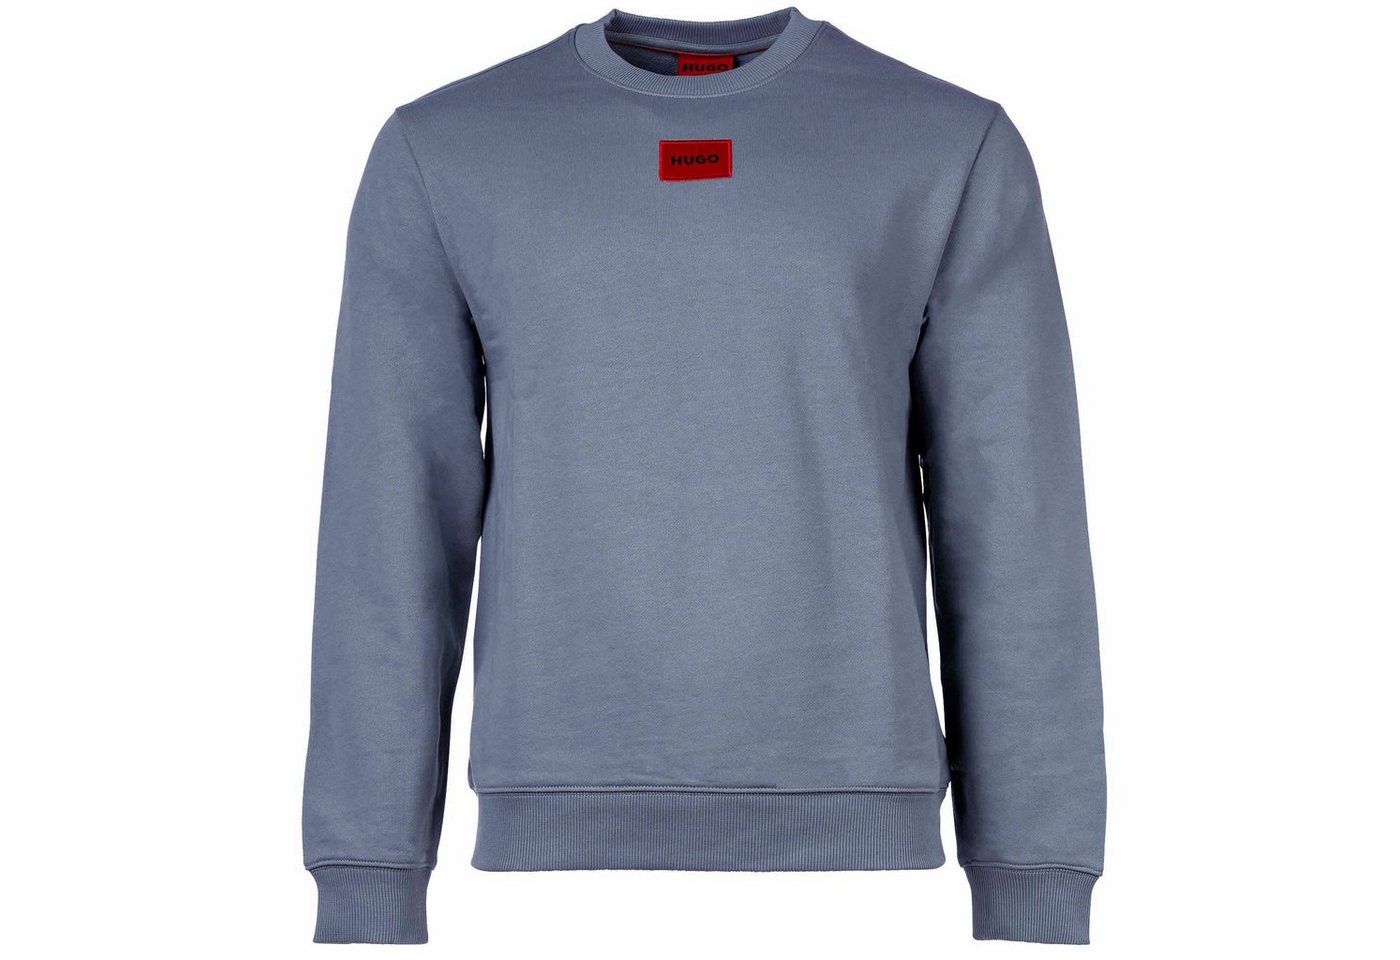 HUGO Sweatshirt Herren Sweater, Diragol212 - Sweatshirt, Rundhals von HUGO